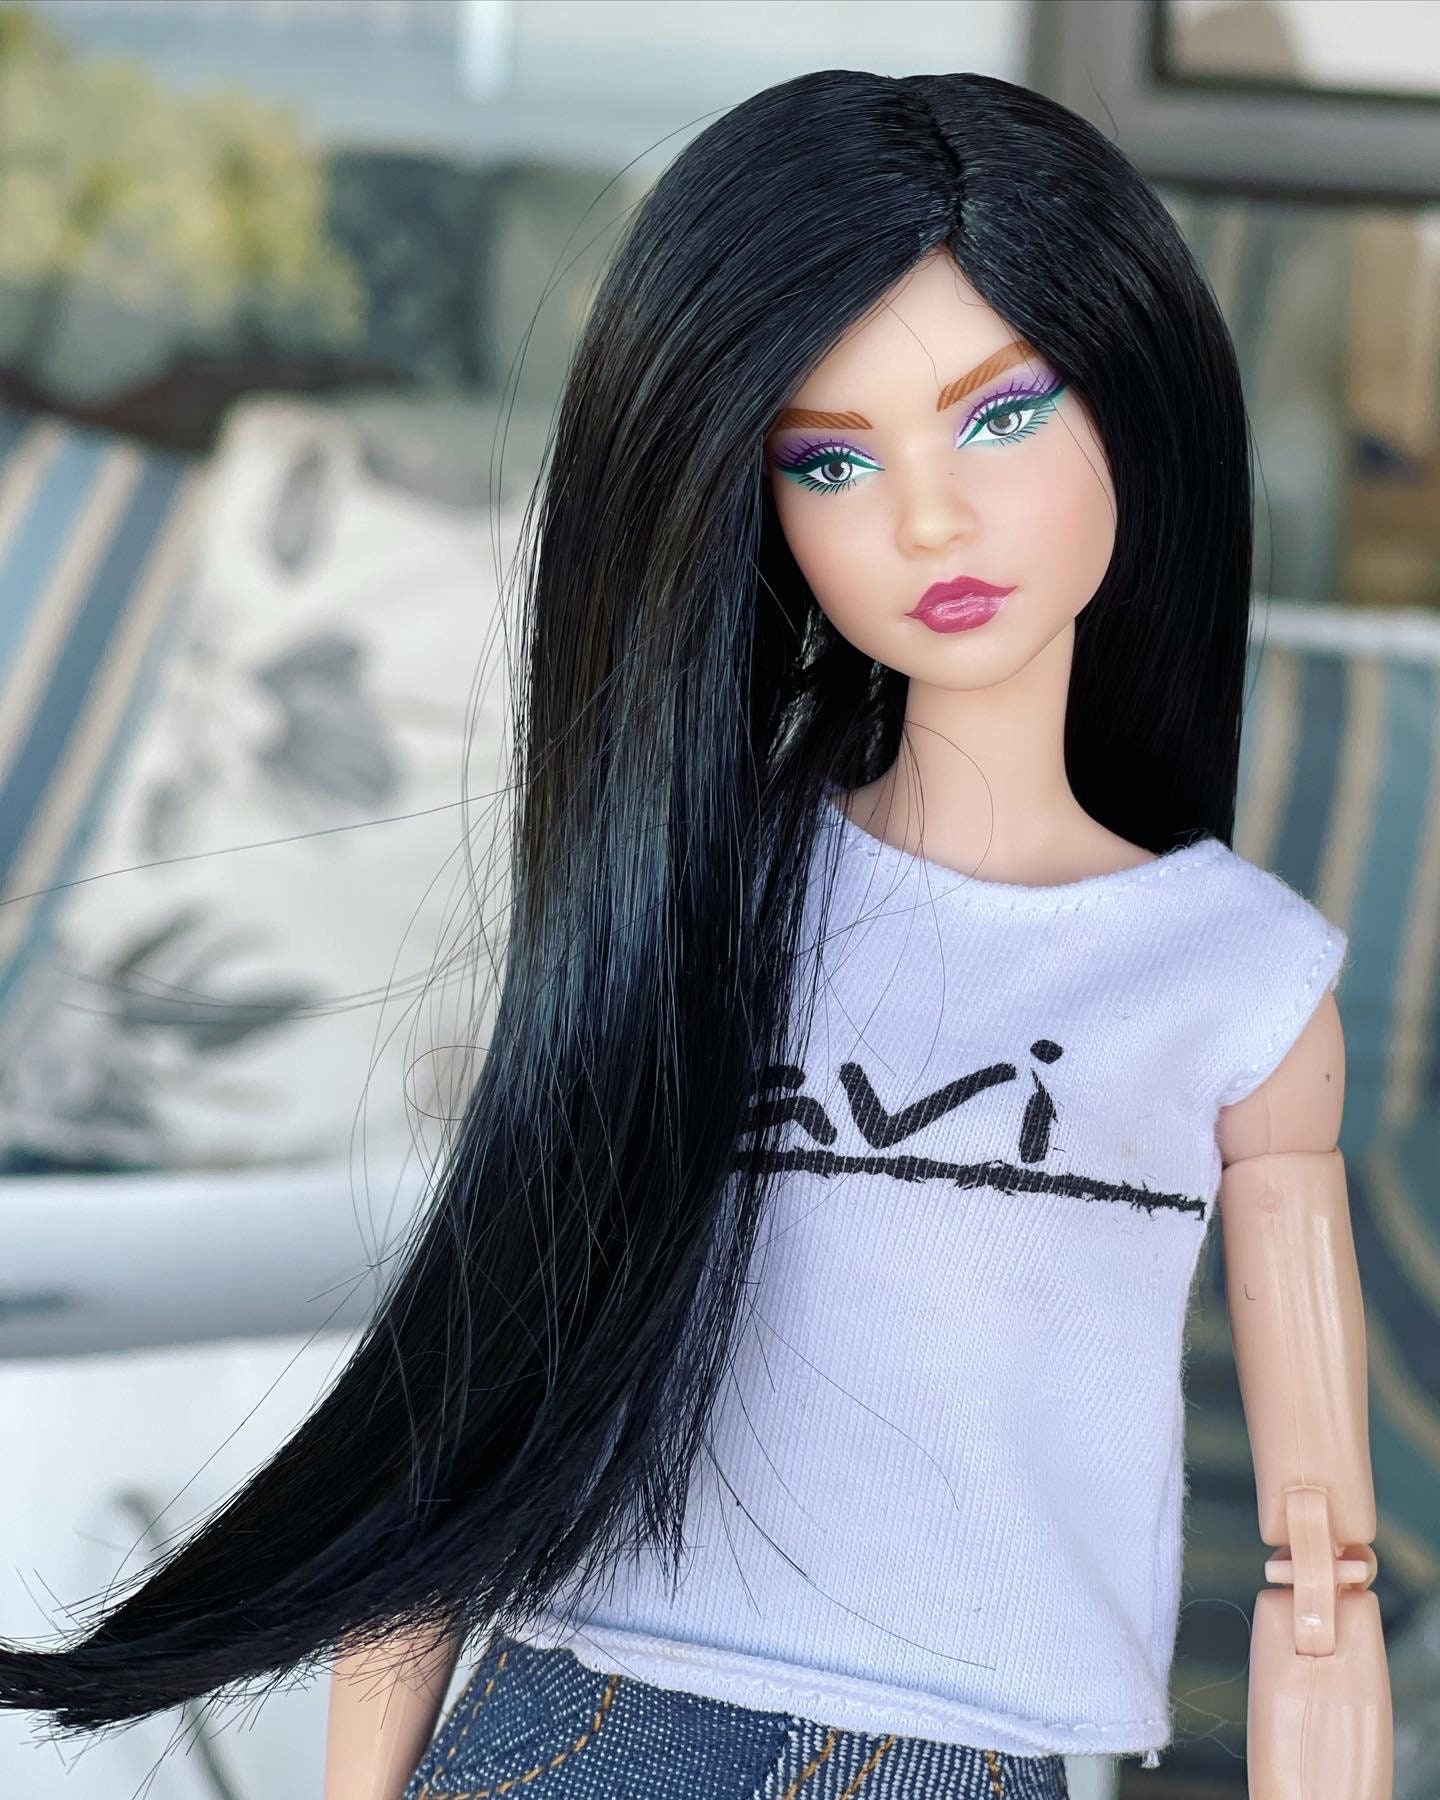 module Hoes Kloppen 1/6 scale Custom WIG for Barbie Fashion Doll head size - Etsy België